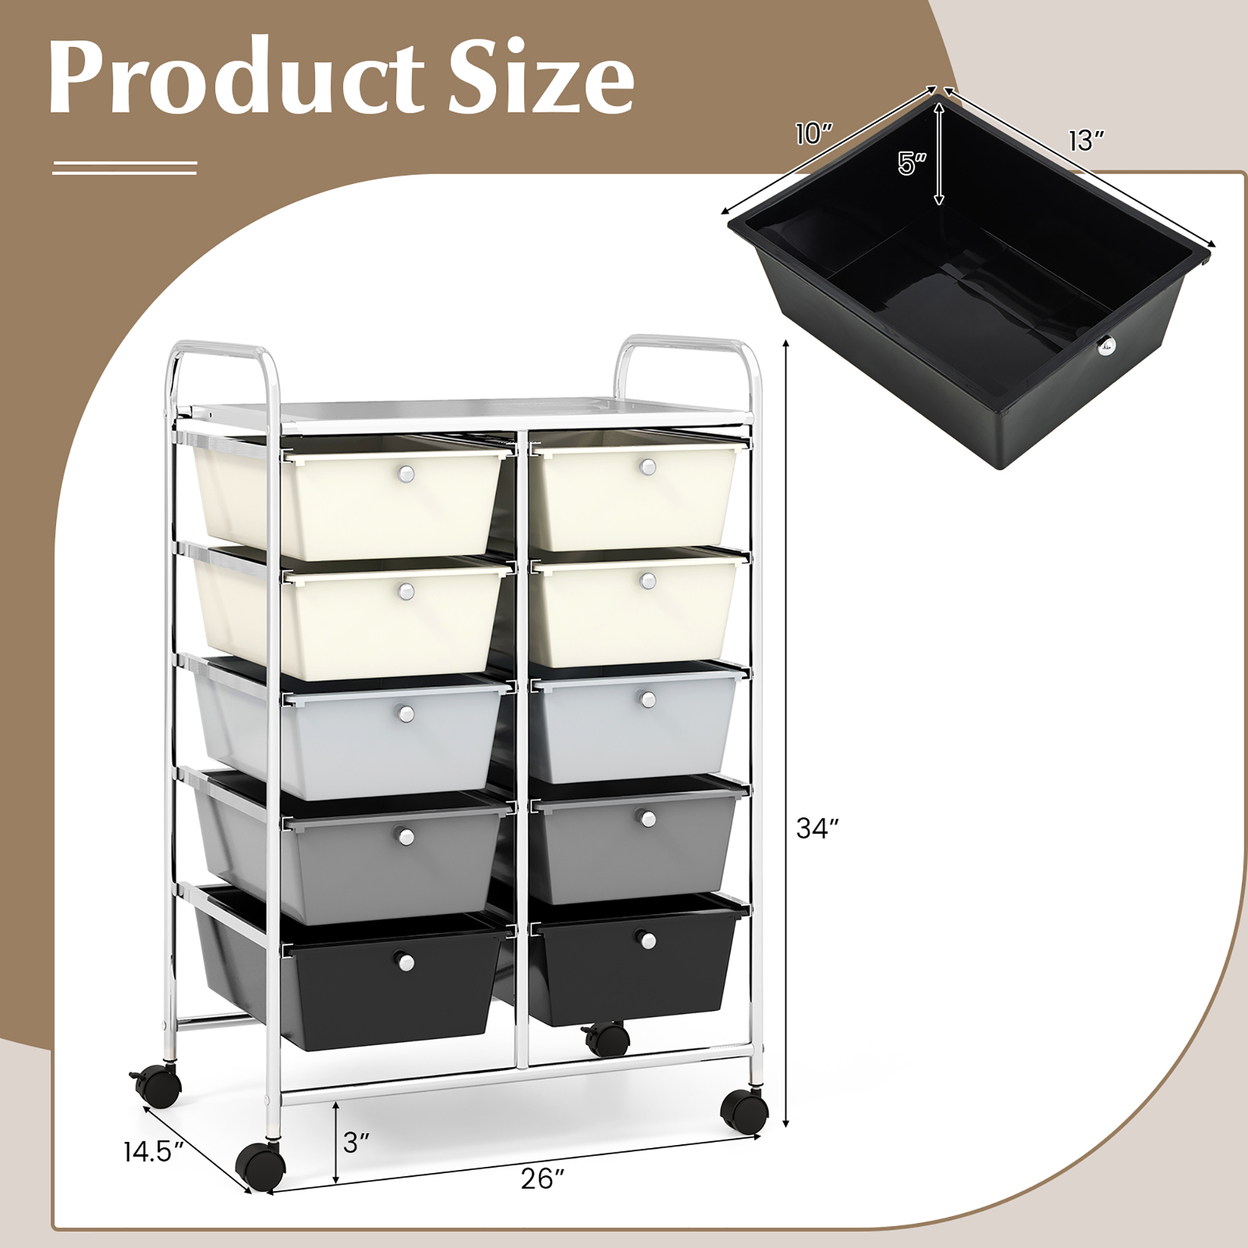 10-Drawer Rolling Storage Cart Tools Scrapbook Paper Organizer On Wheels Grey Gradient